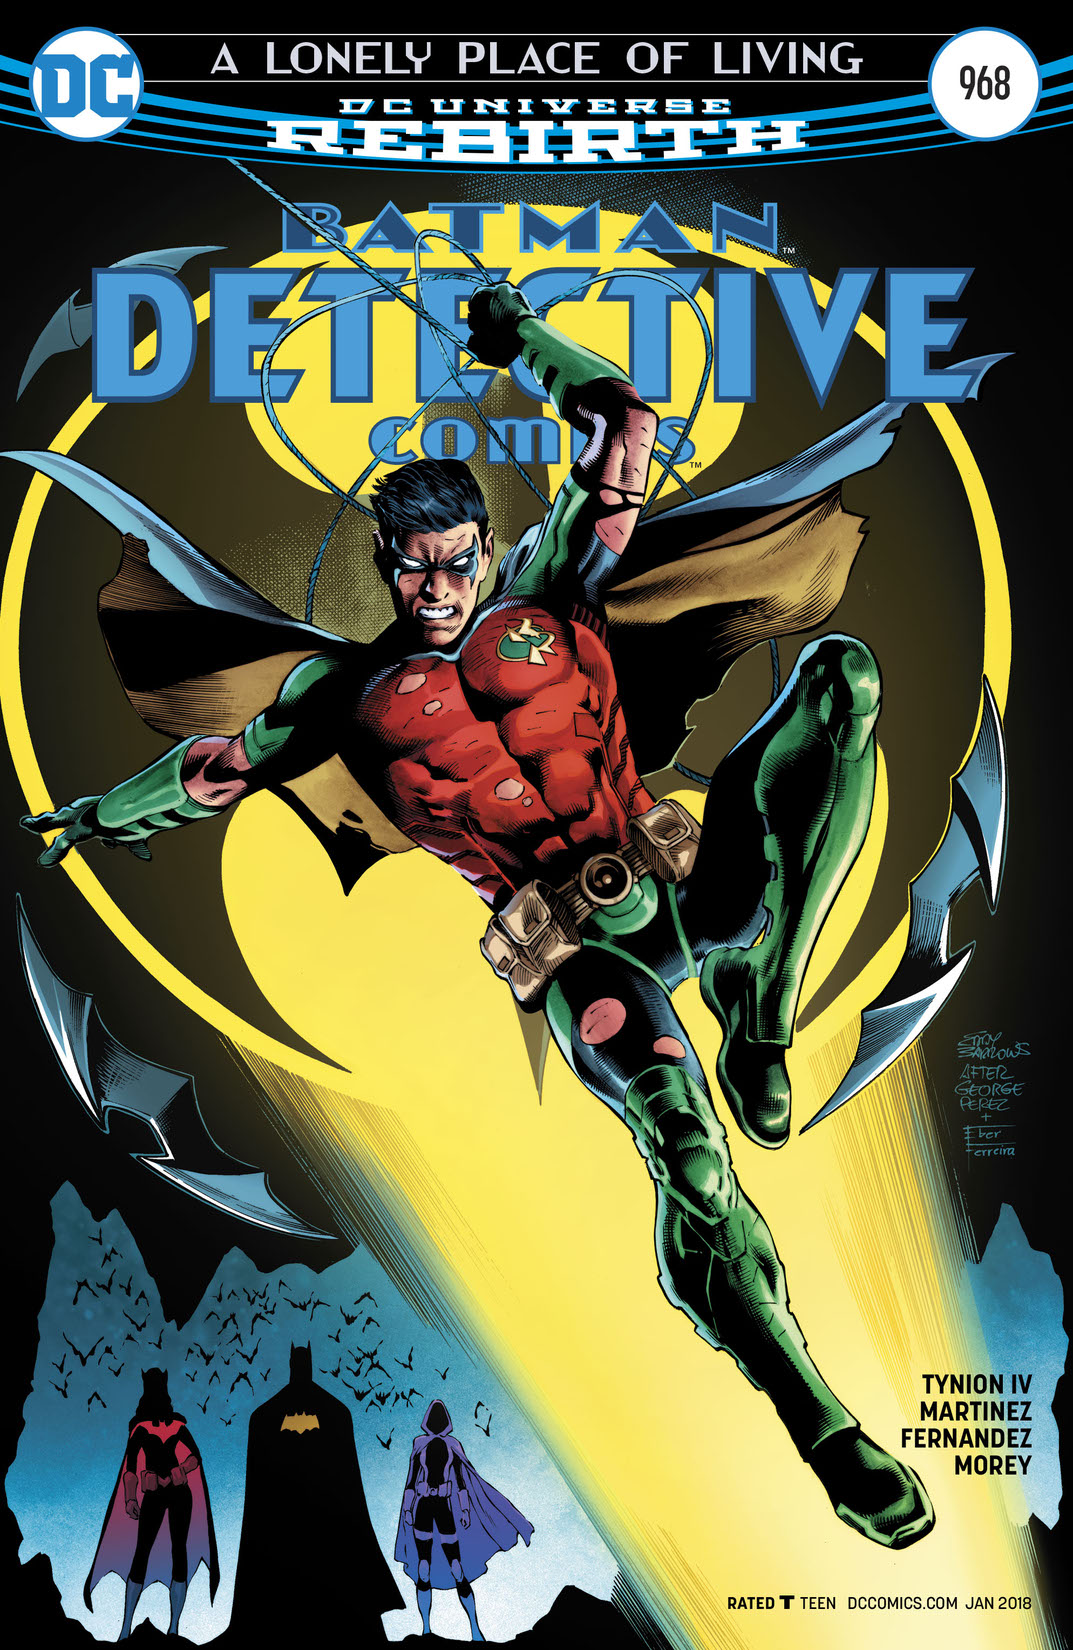 Detective Comics (2016-) #968 preview images